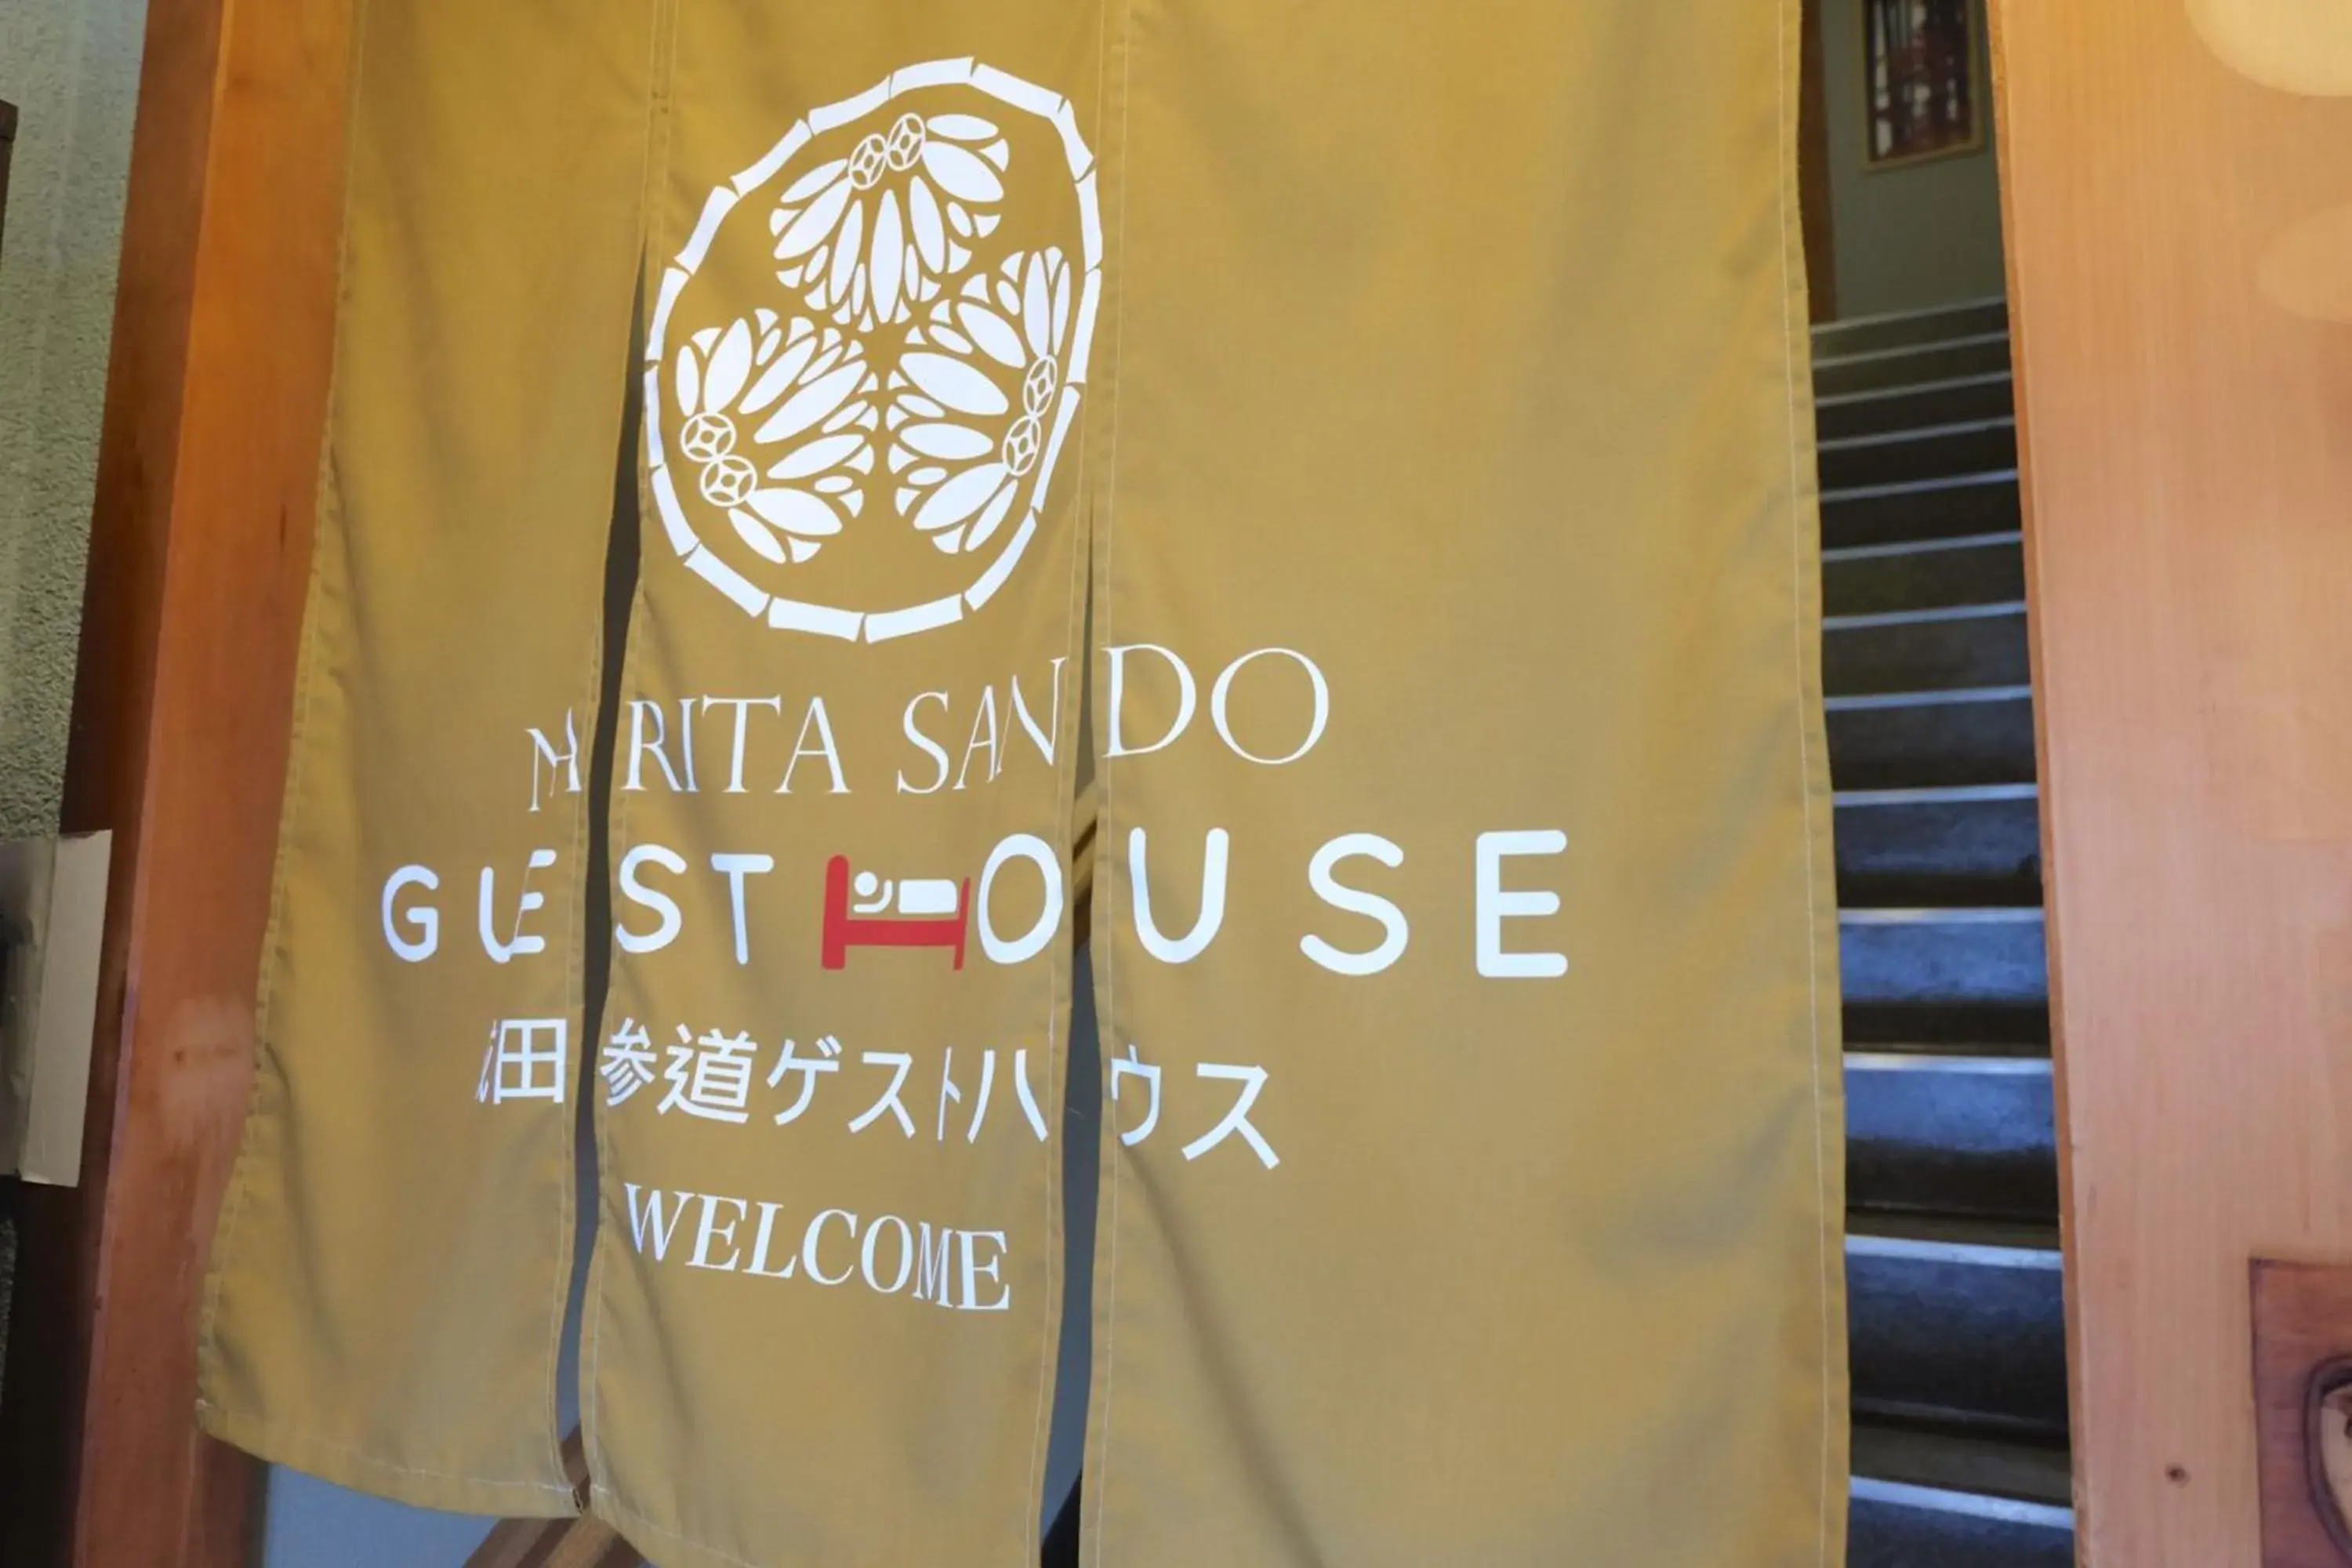 Property logo or sign in Narita Sando Guesthouse